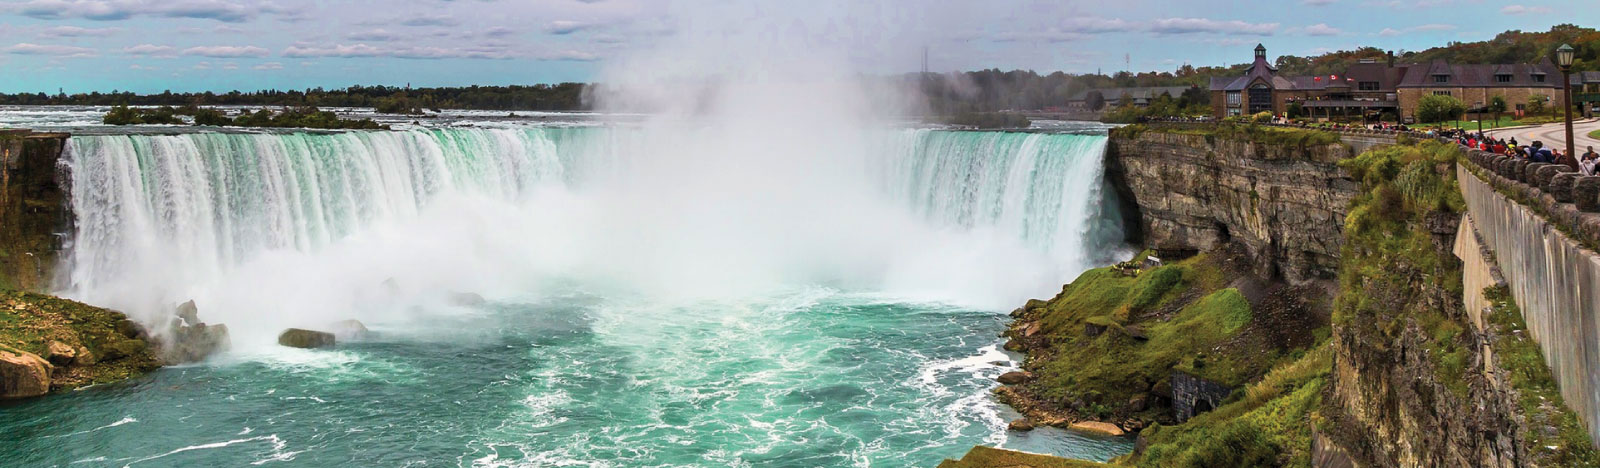 Upcoming Events New Year's Eve Niagara Falls